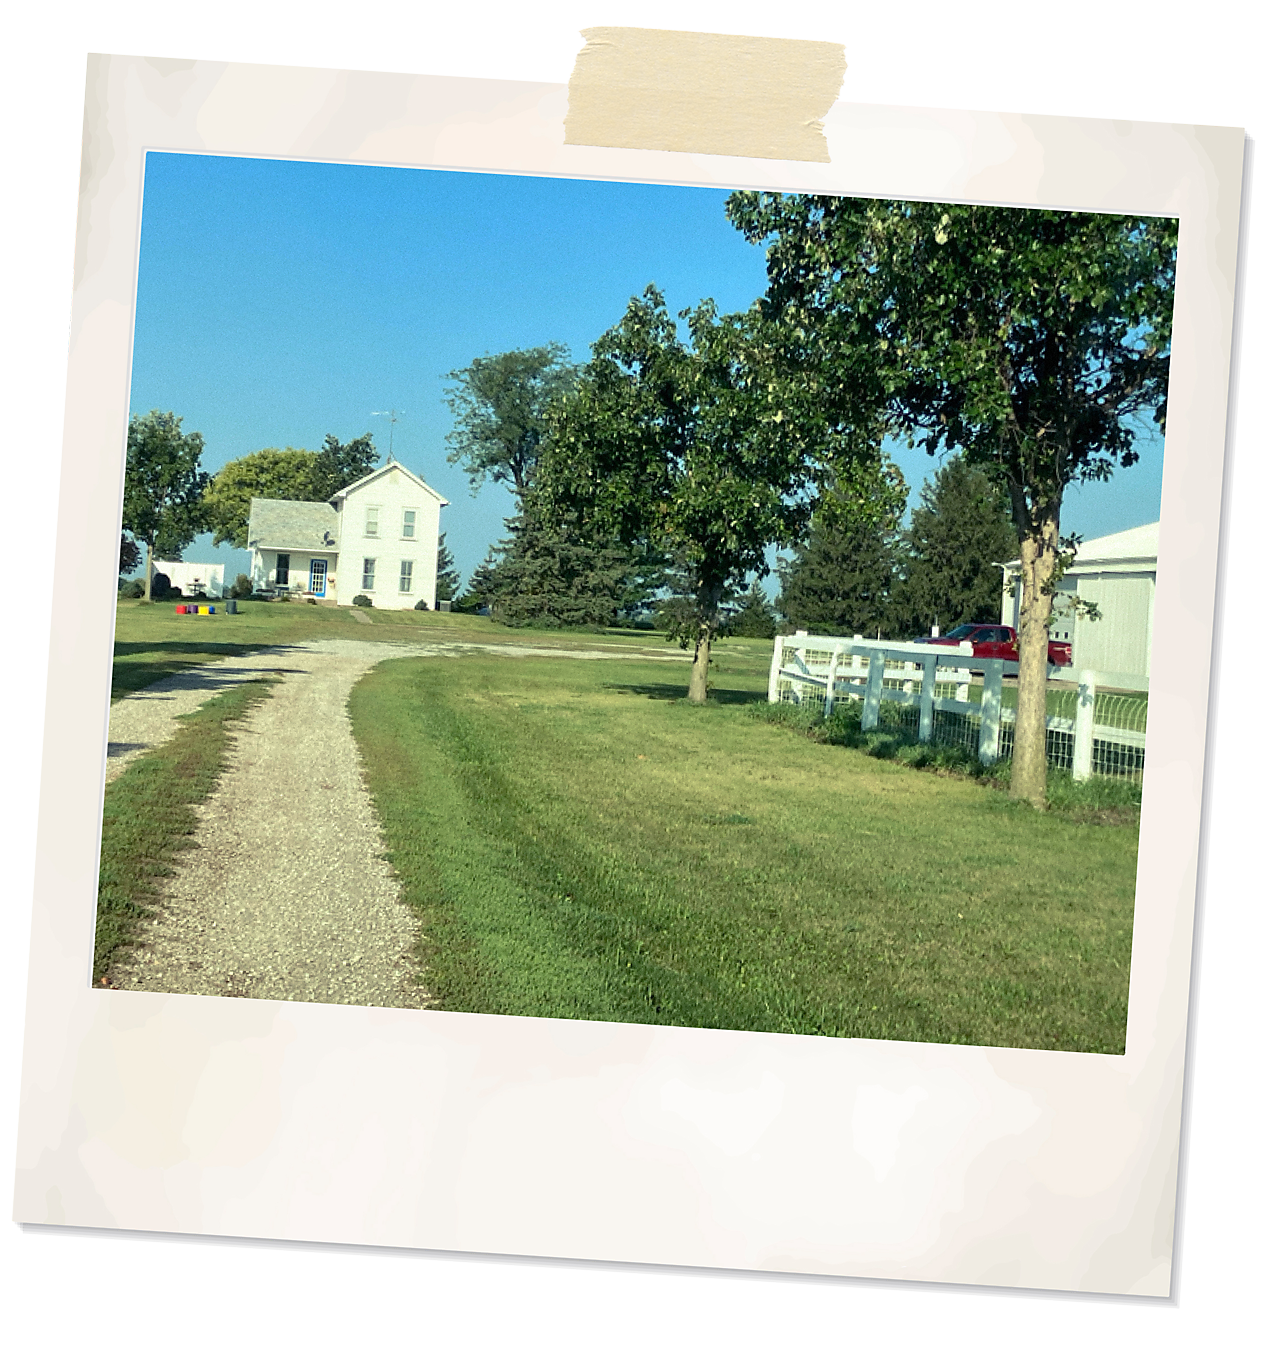 Polaroid of image from Bill Furlong, Iowa Farmer (House)